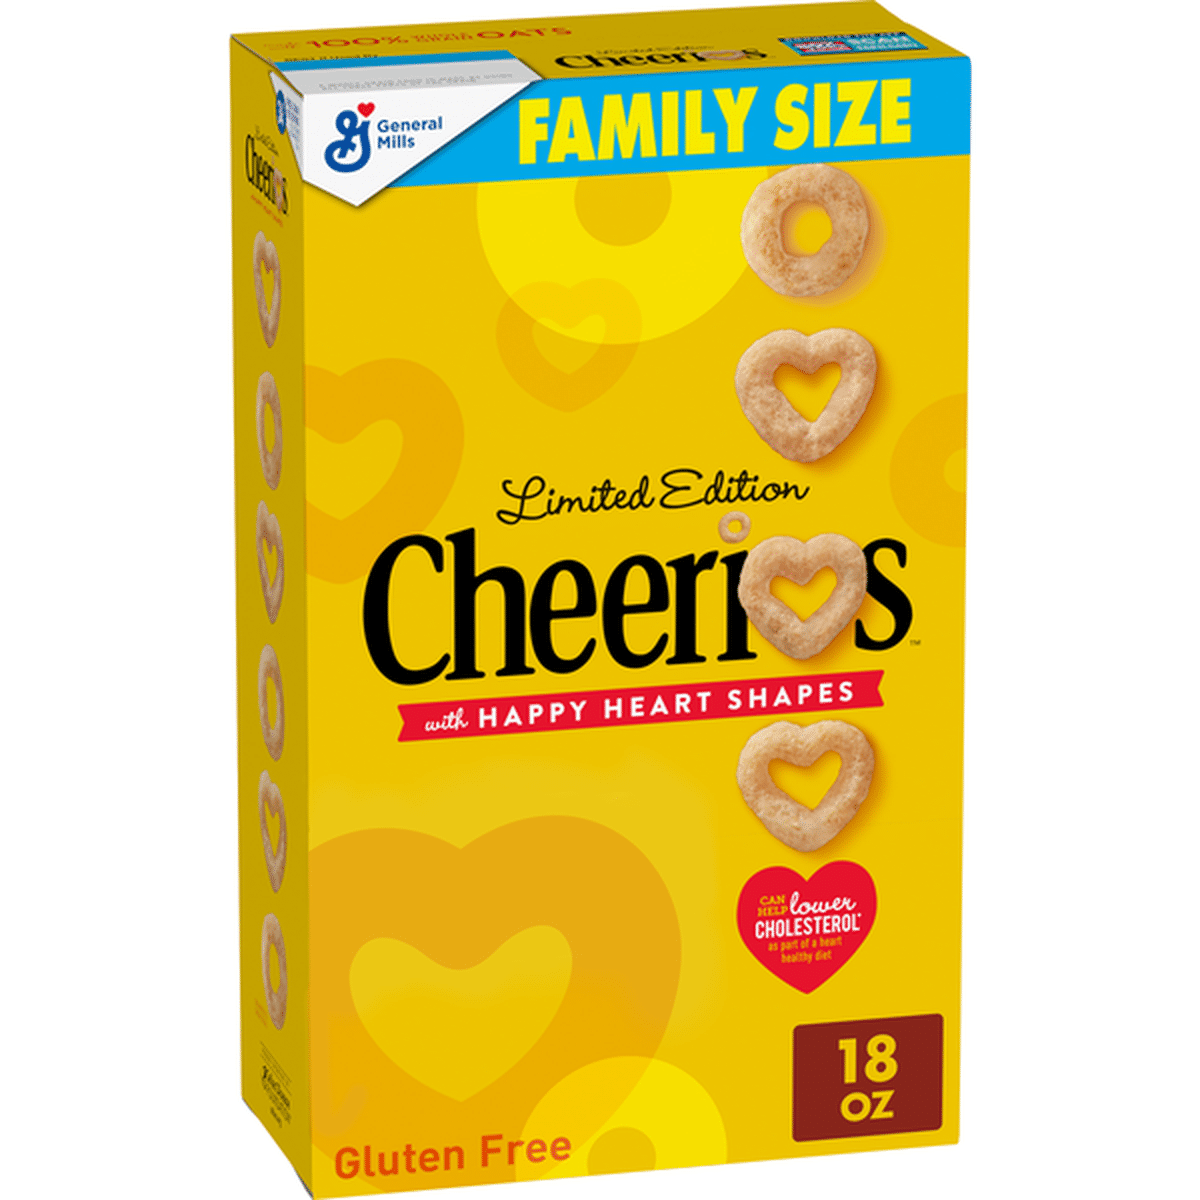 Honey Nut Cheerios Heart Healthy Gluten Free Breakfast Cereal